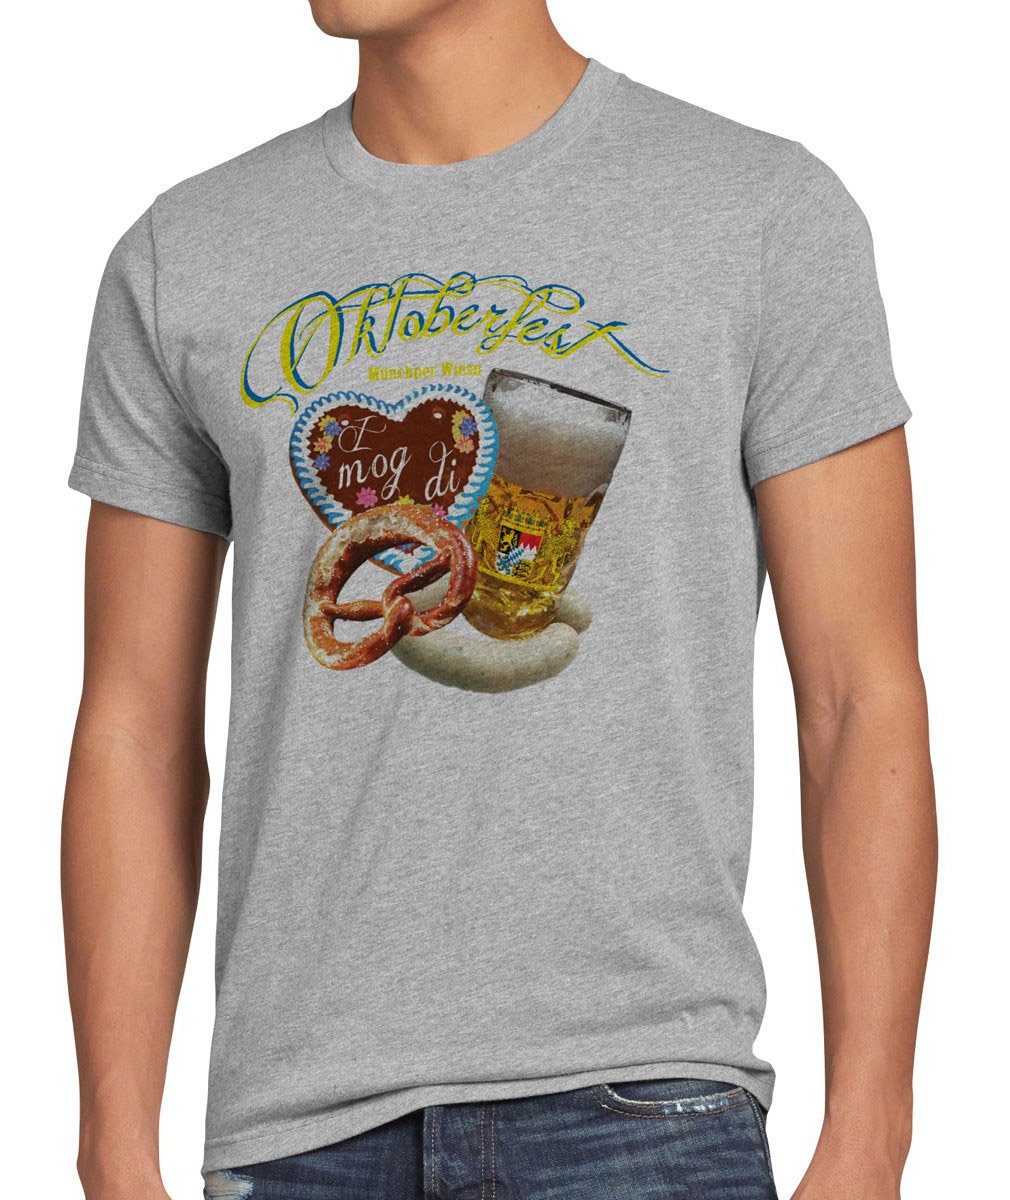 Wiesn München grau Party Fest Oktoberfest Volksfest Bier Print-Shirt meliert style3 T-Shirt Herren Zelt Maß Dult